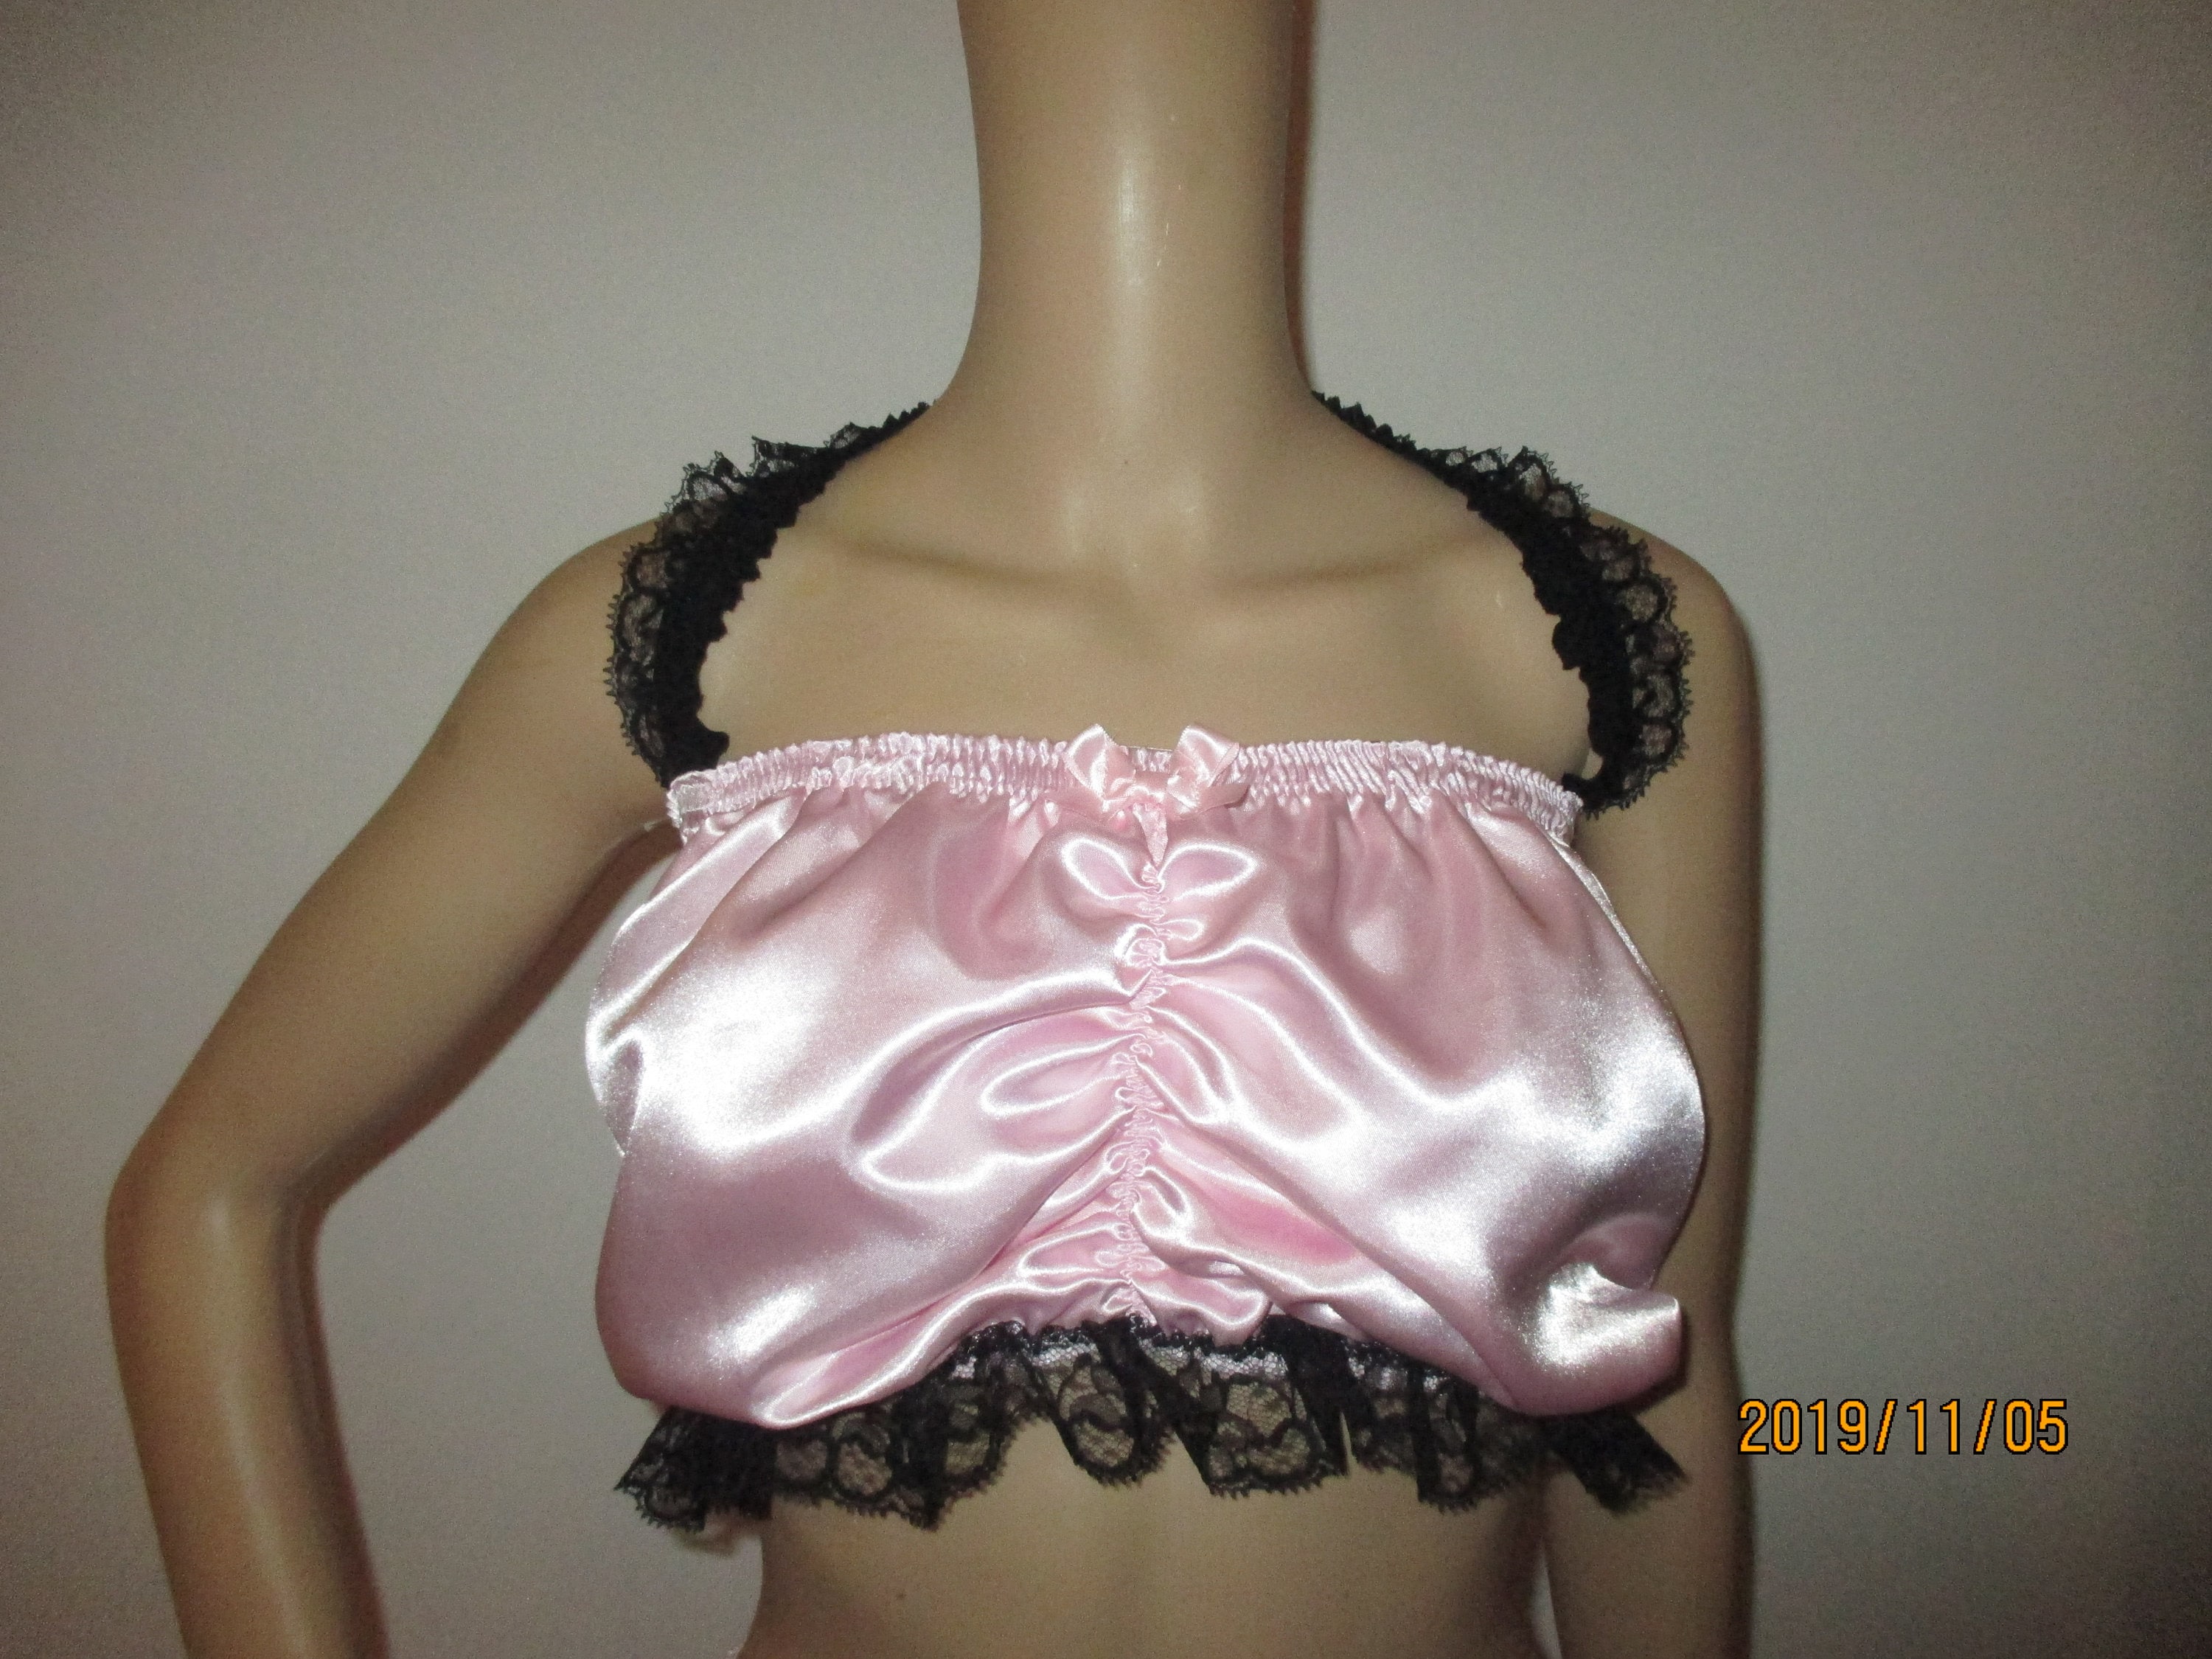 Crossdresser kit, silicone forms, bras, panties, garter belt - MrBra h